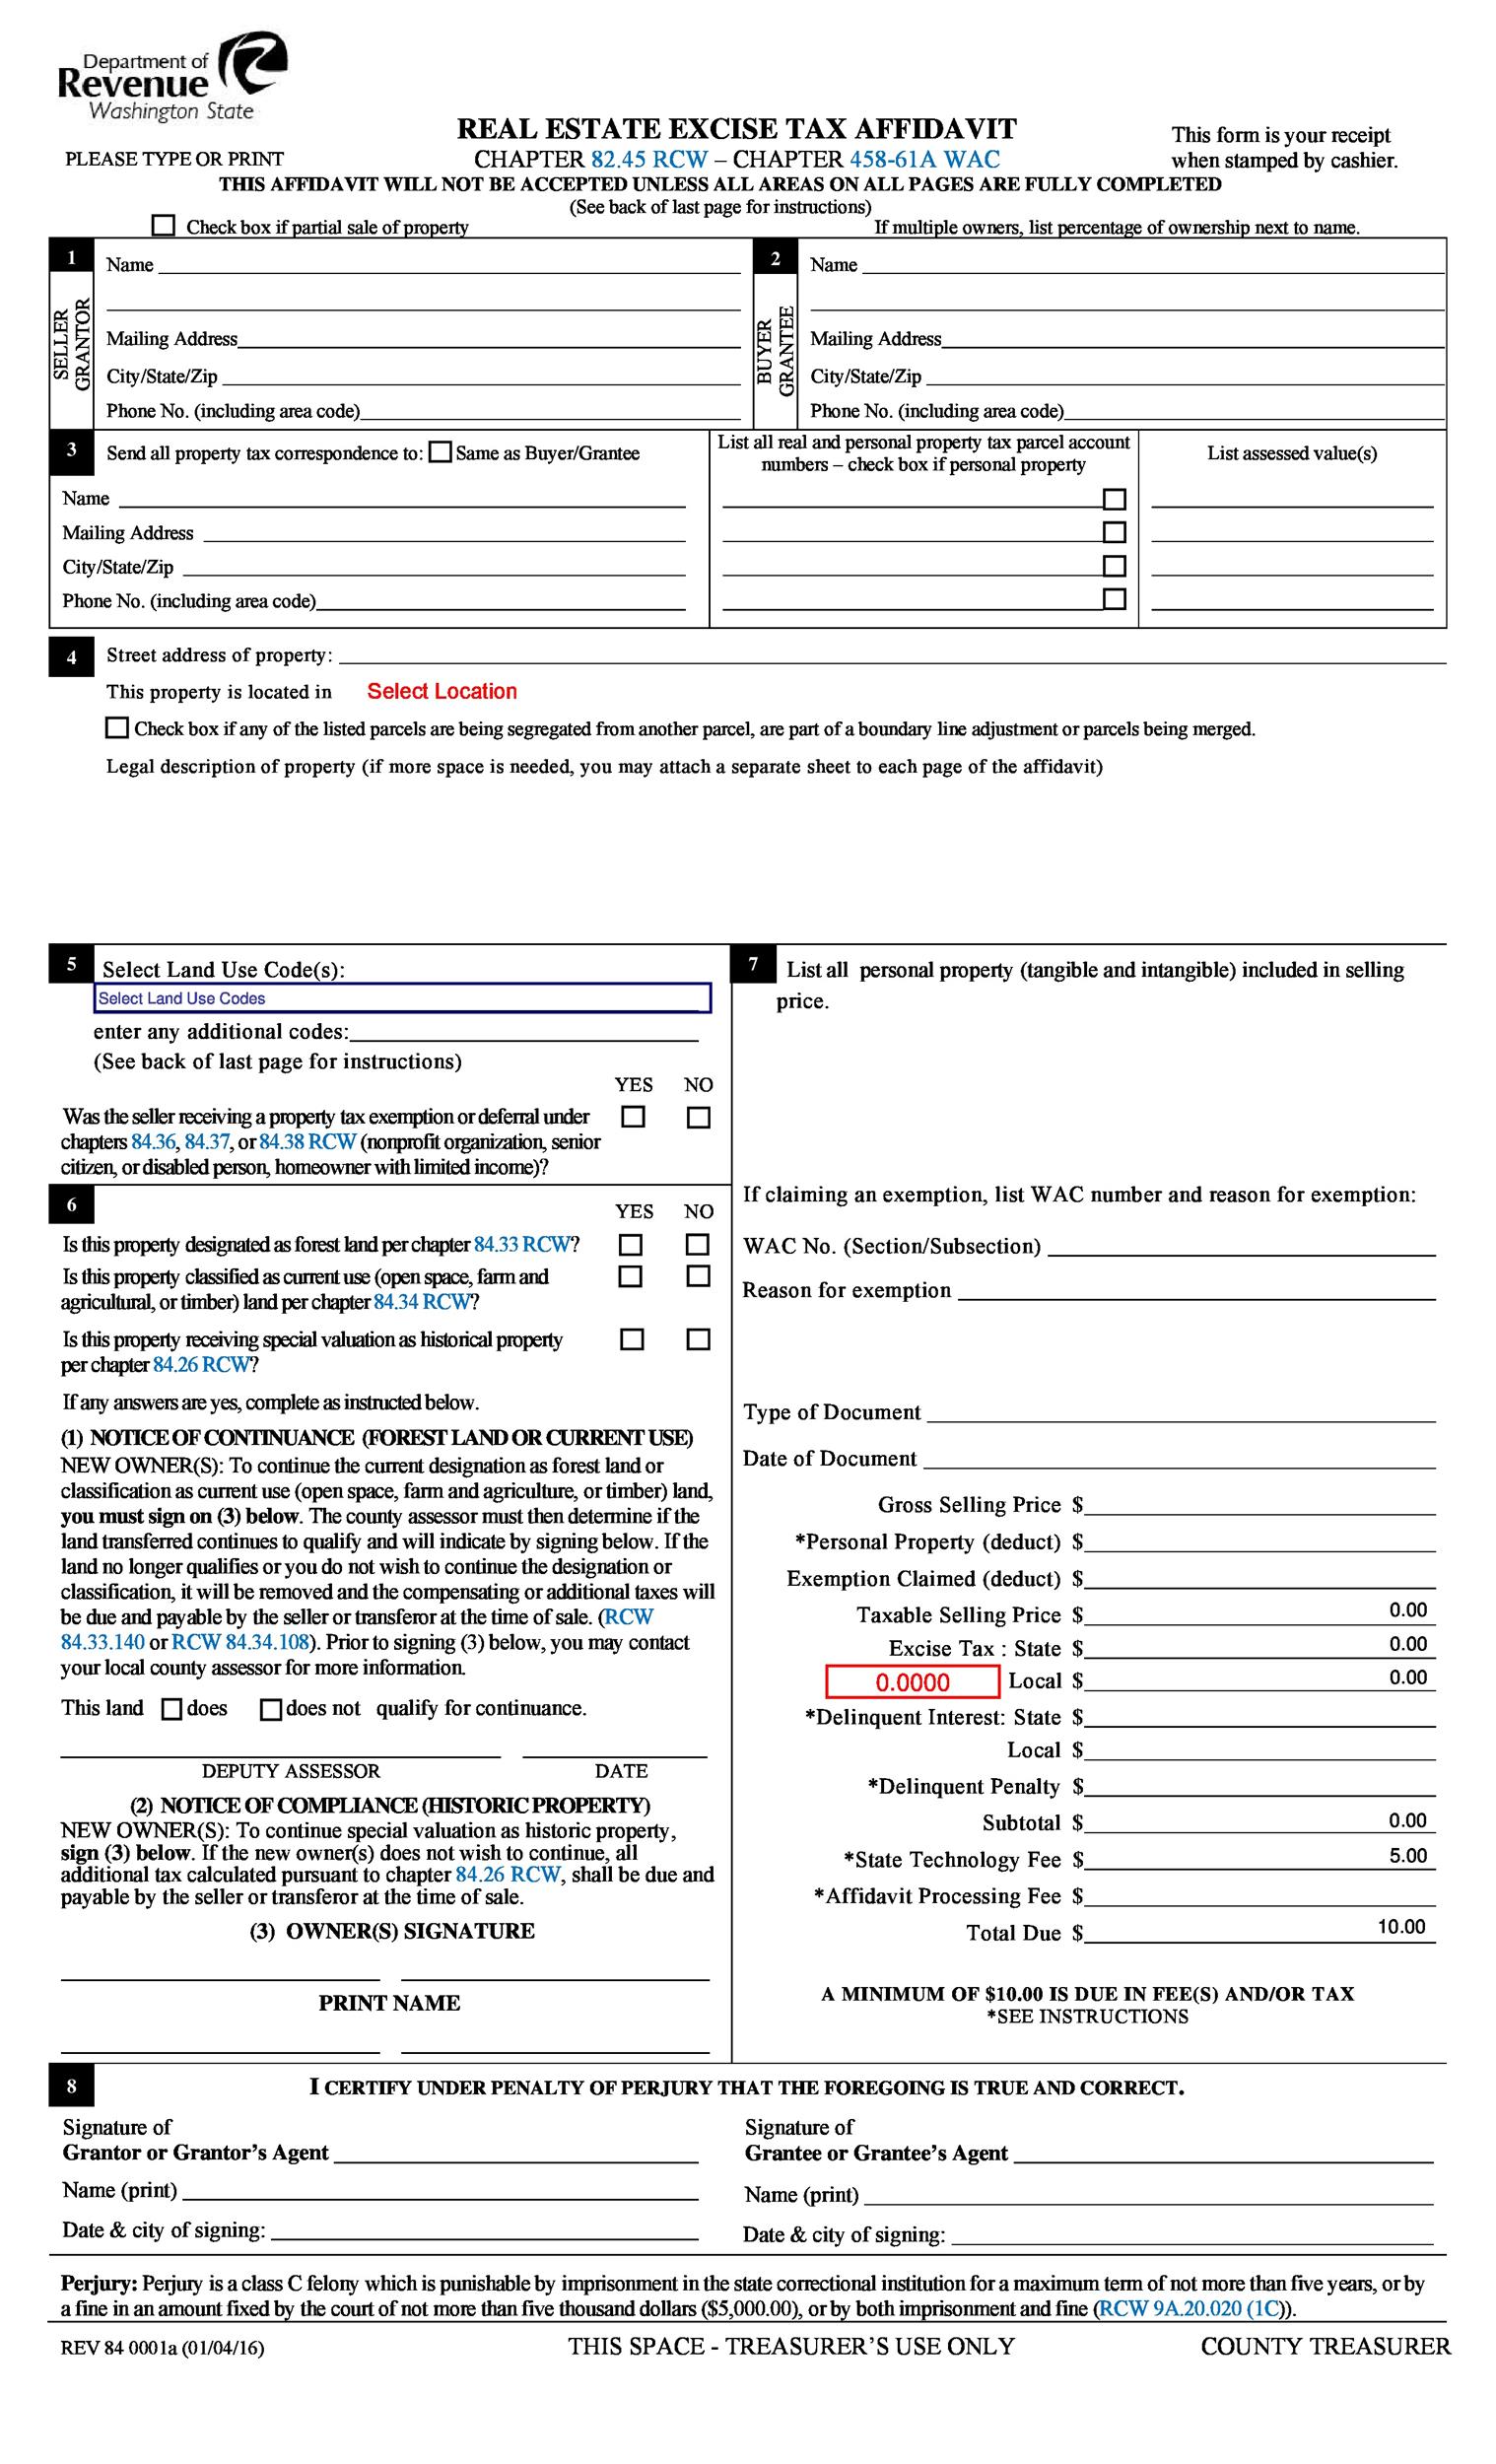 Free affidavit form 40